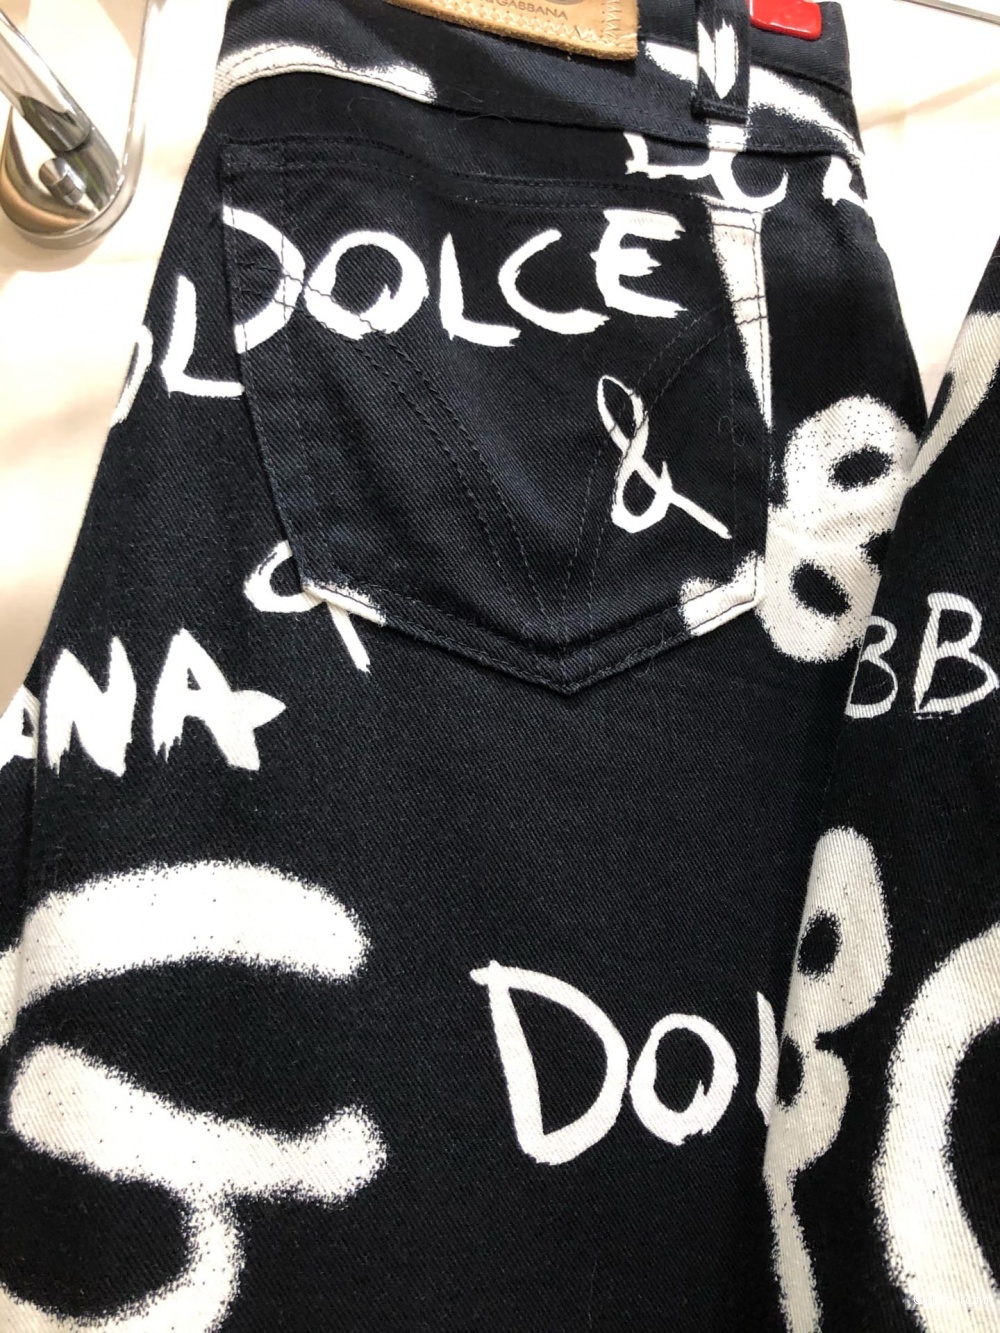 Костюм Dolce & Gabbana.Размер S-M.